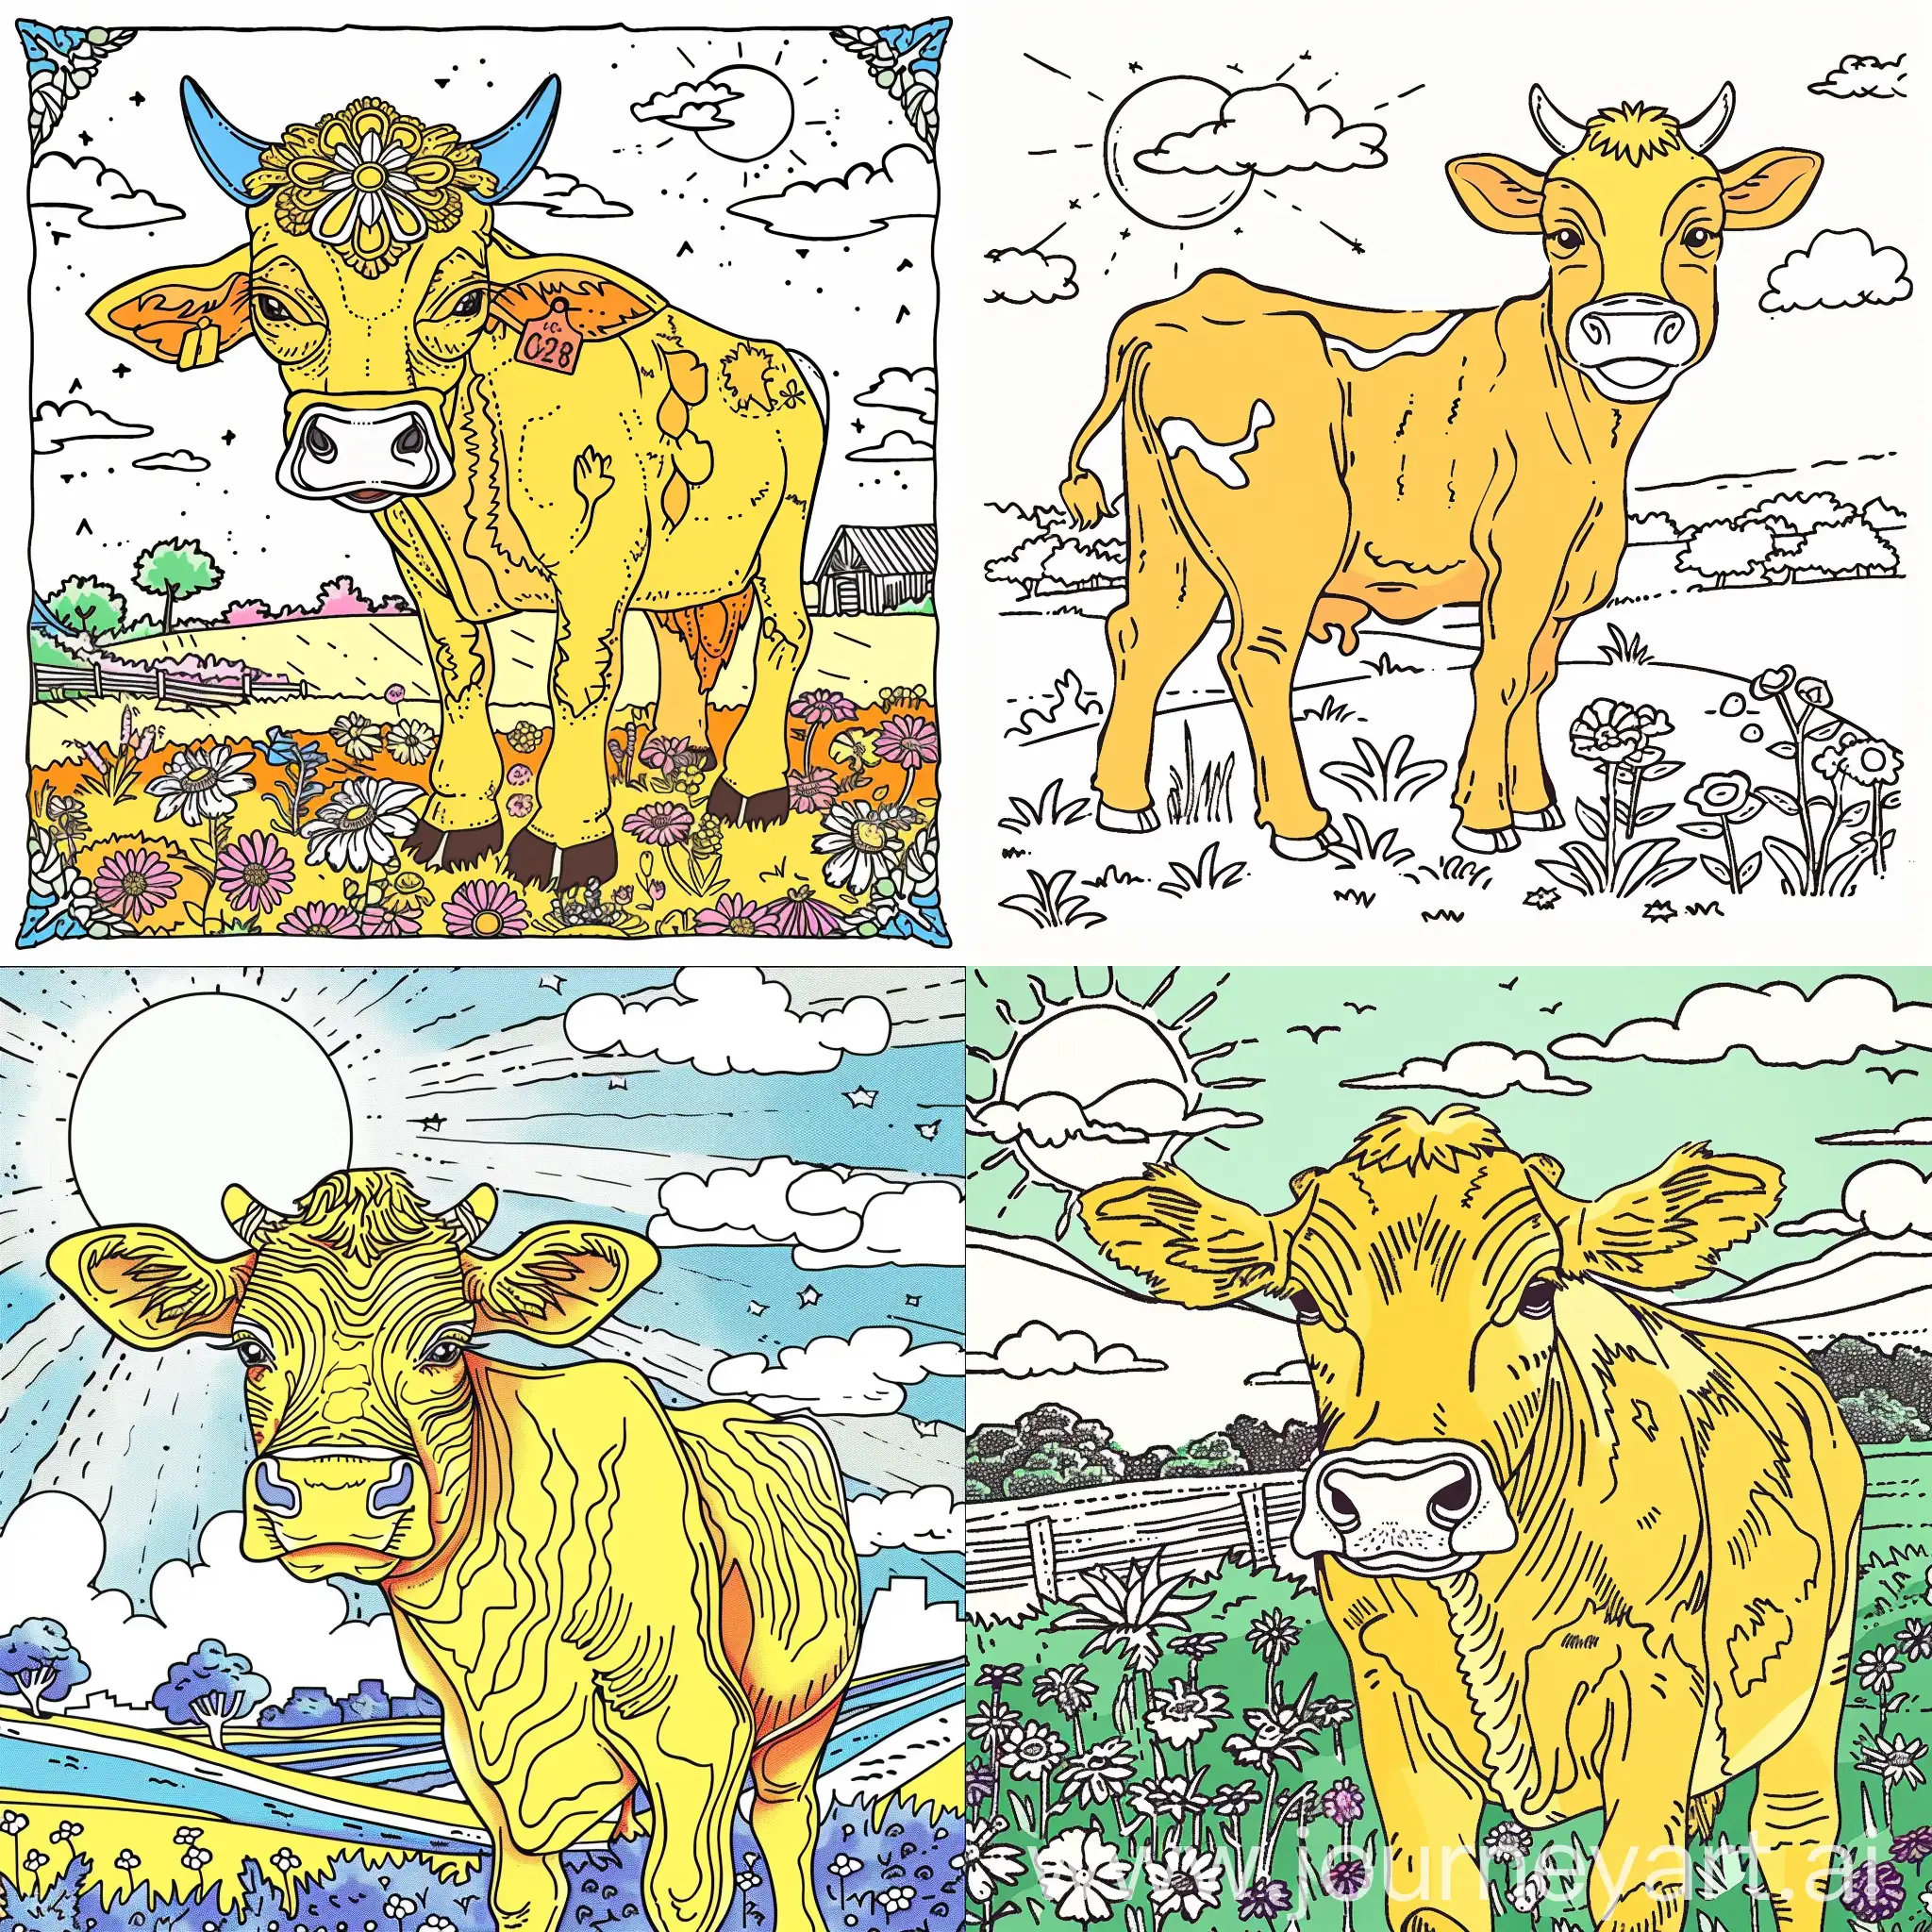 Раскрась желтую корову
